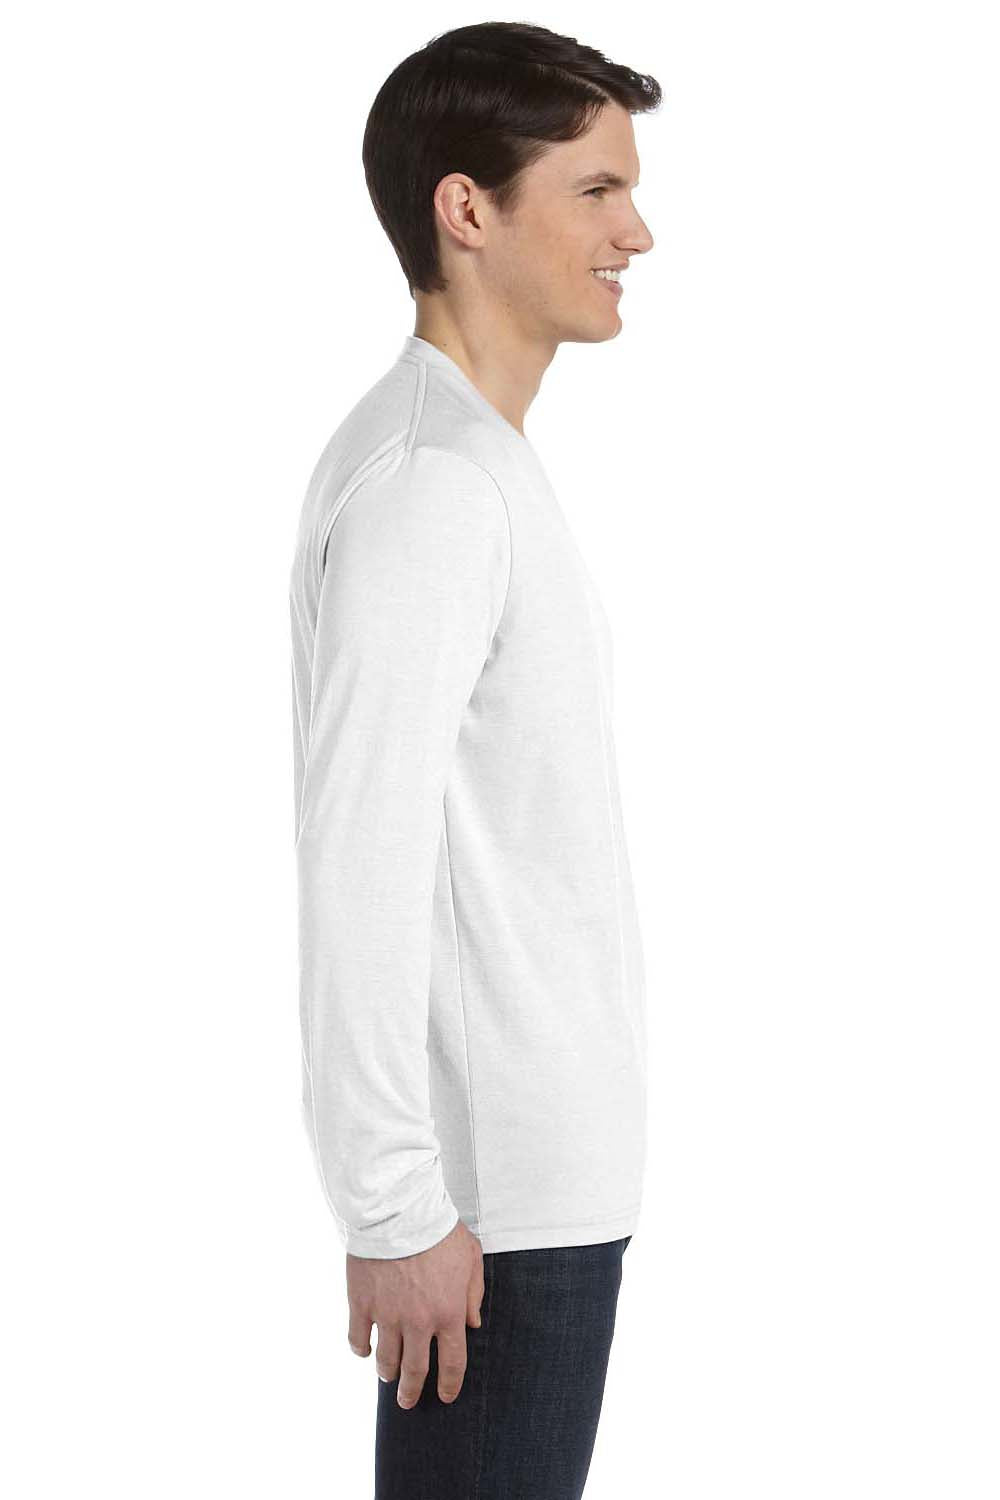 Bella + Canvas 3425 Mens Jersey Long Sleeve V-Neck T-Shirt White Side